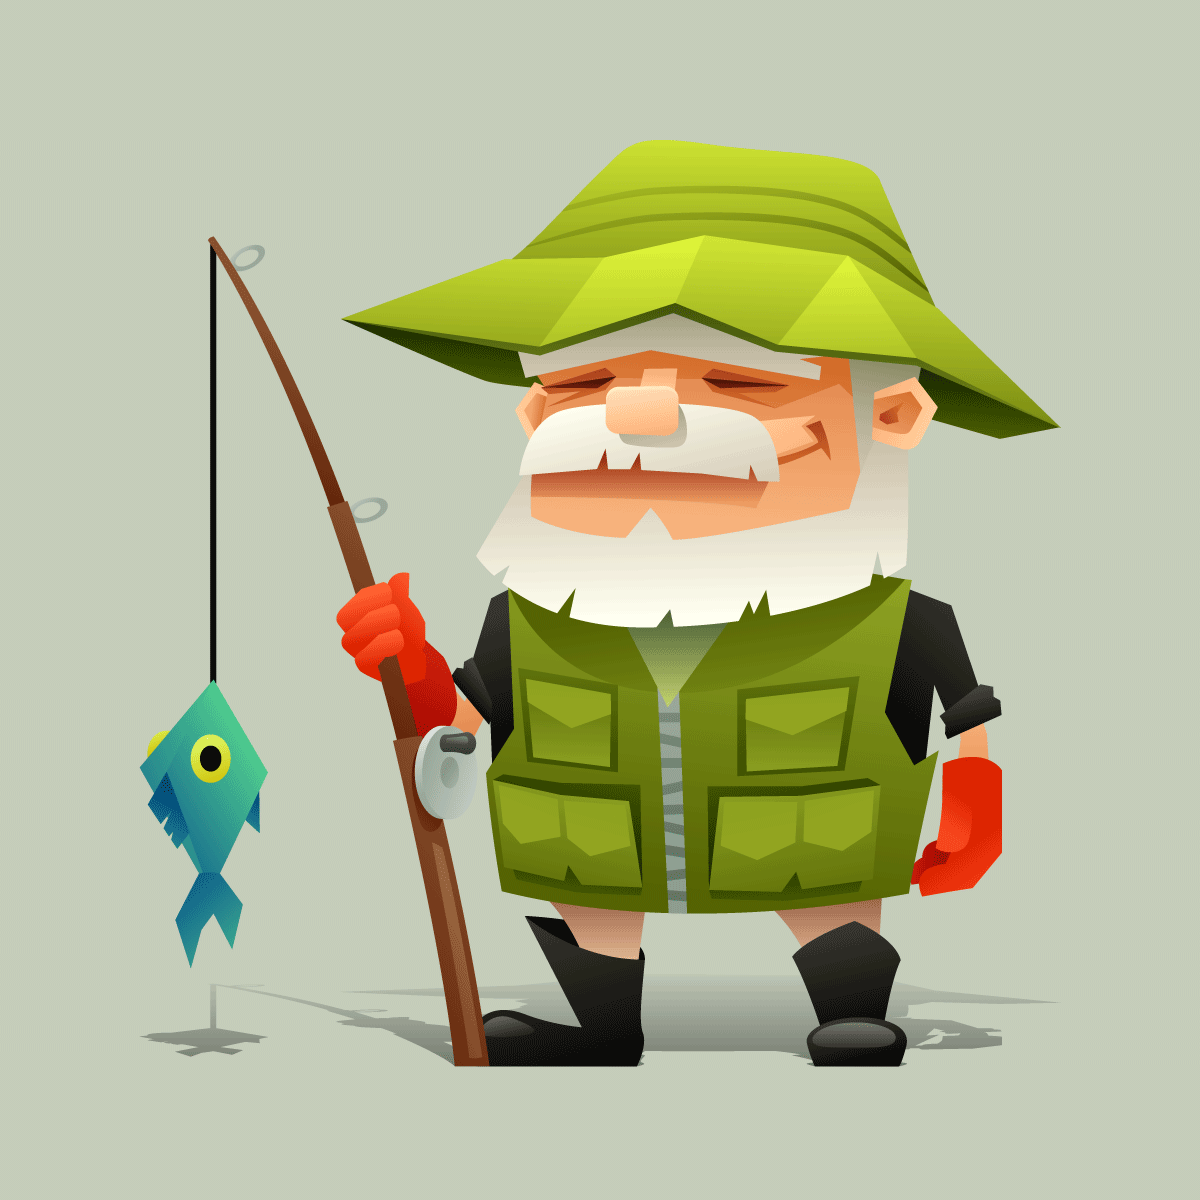 Дедушка ловит рыбу. Дед Рыбак. Старик Рыбак. Мультяшные рыбаки. Старый дед Рыбак.